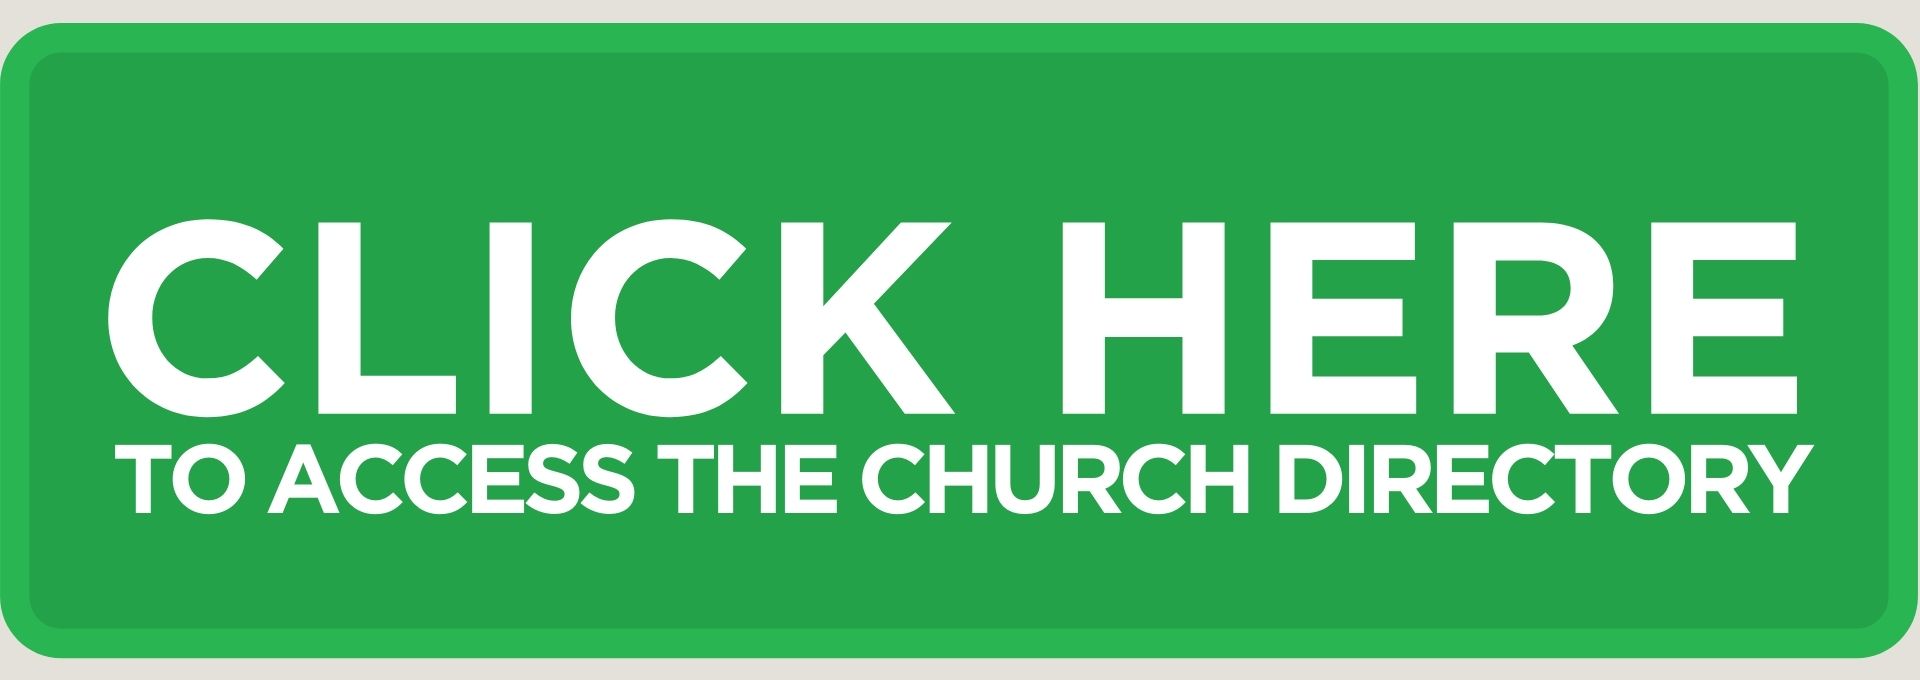 Church Directory Button